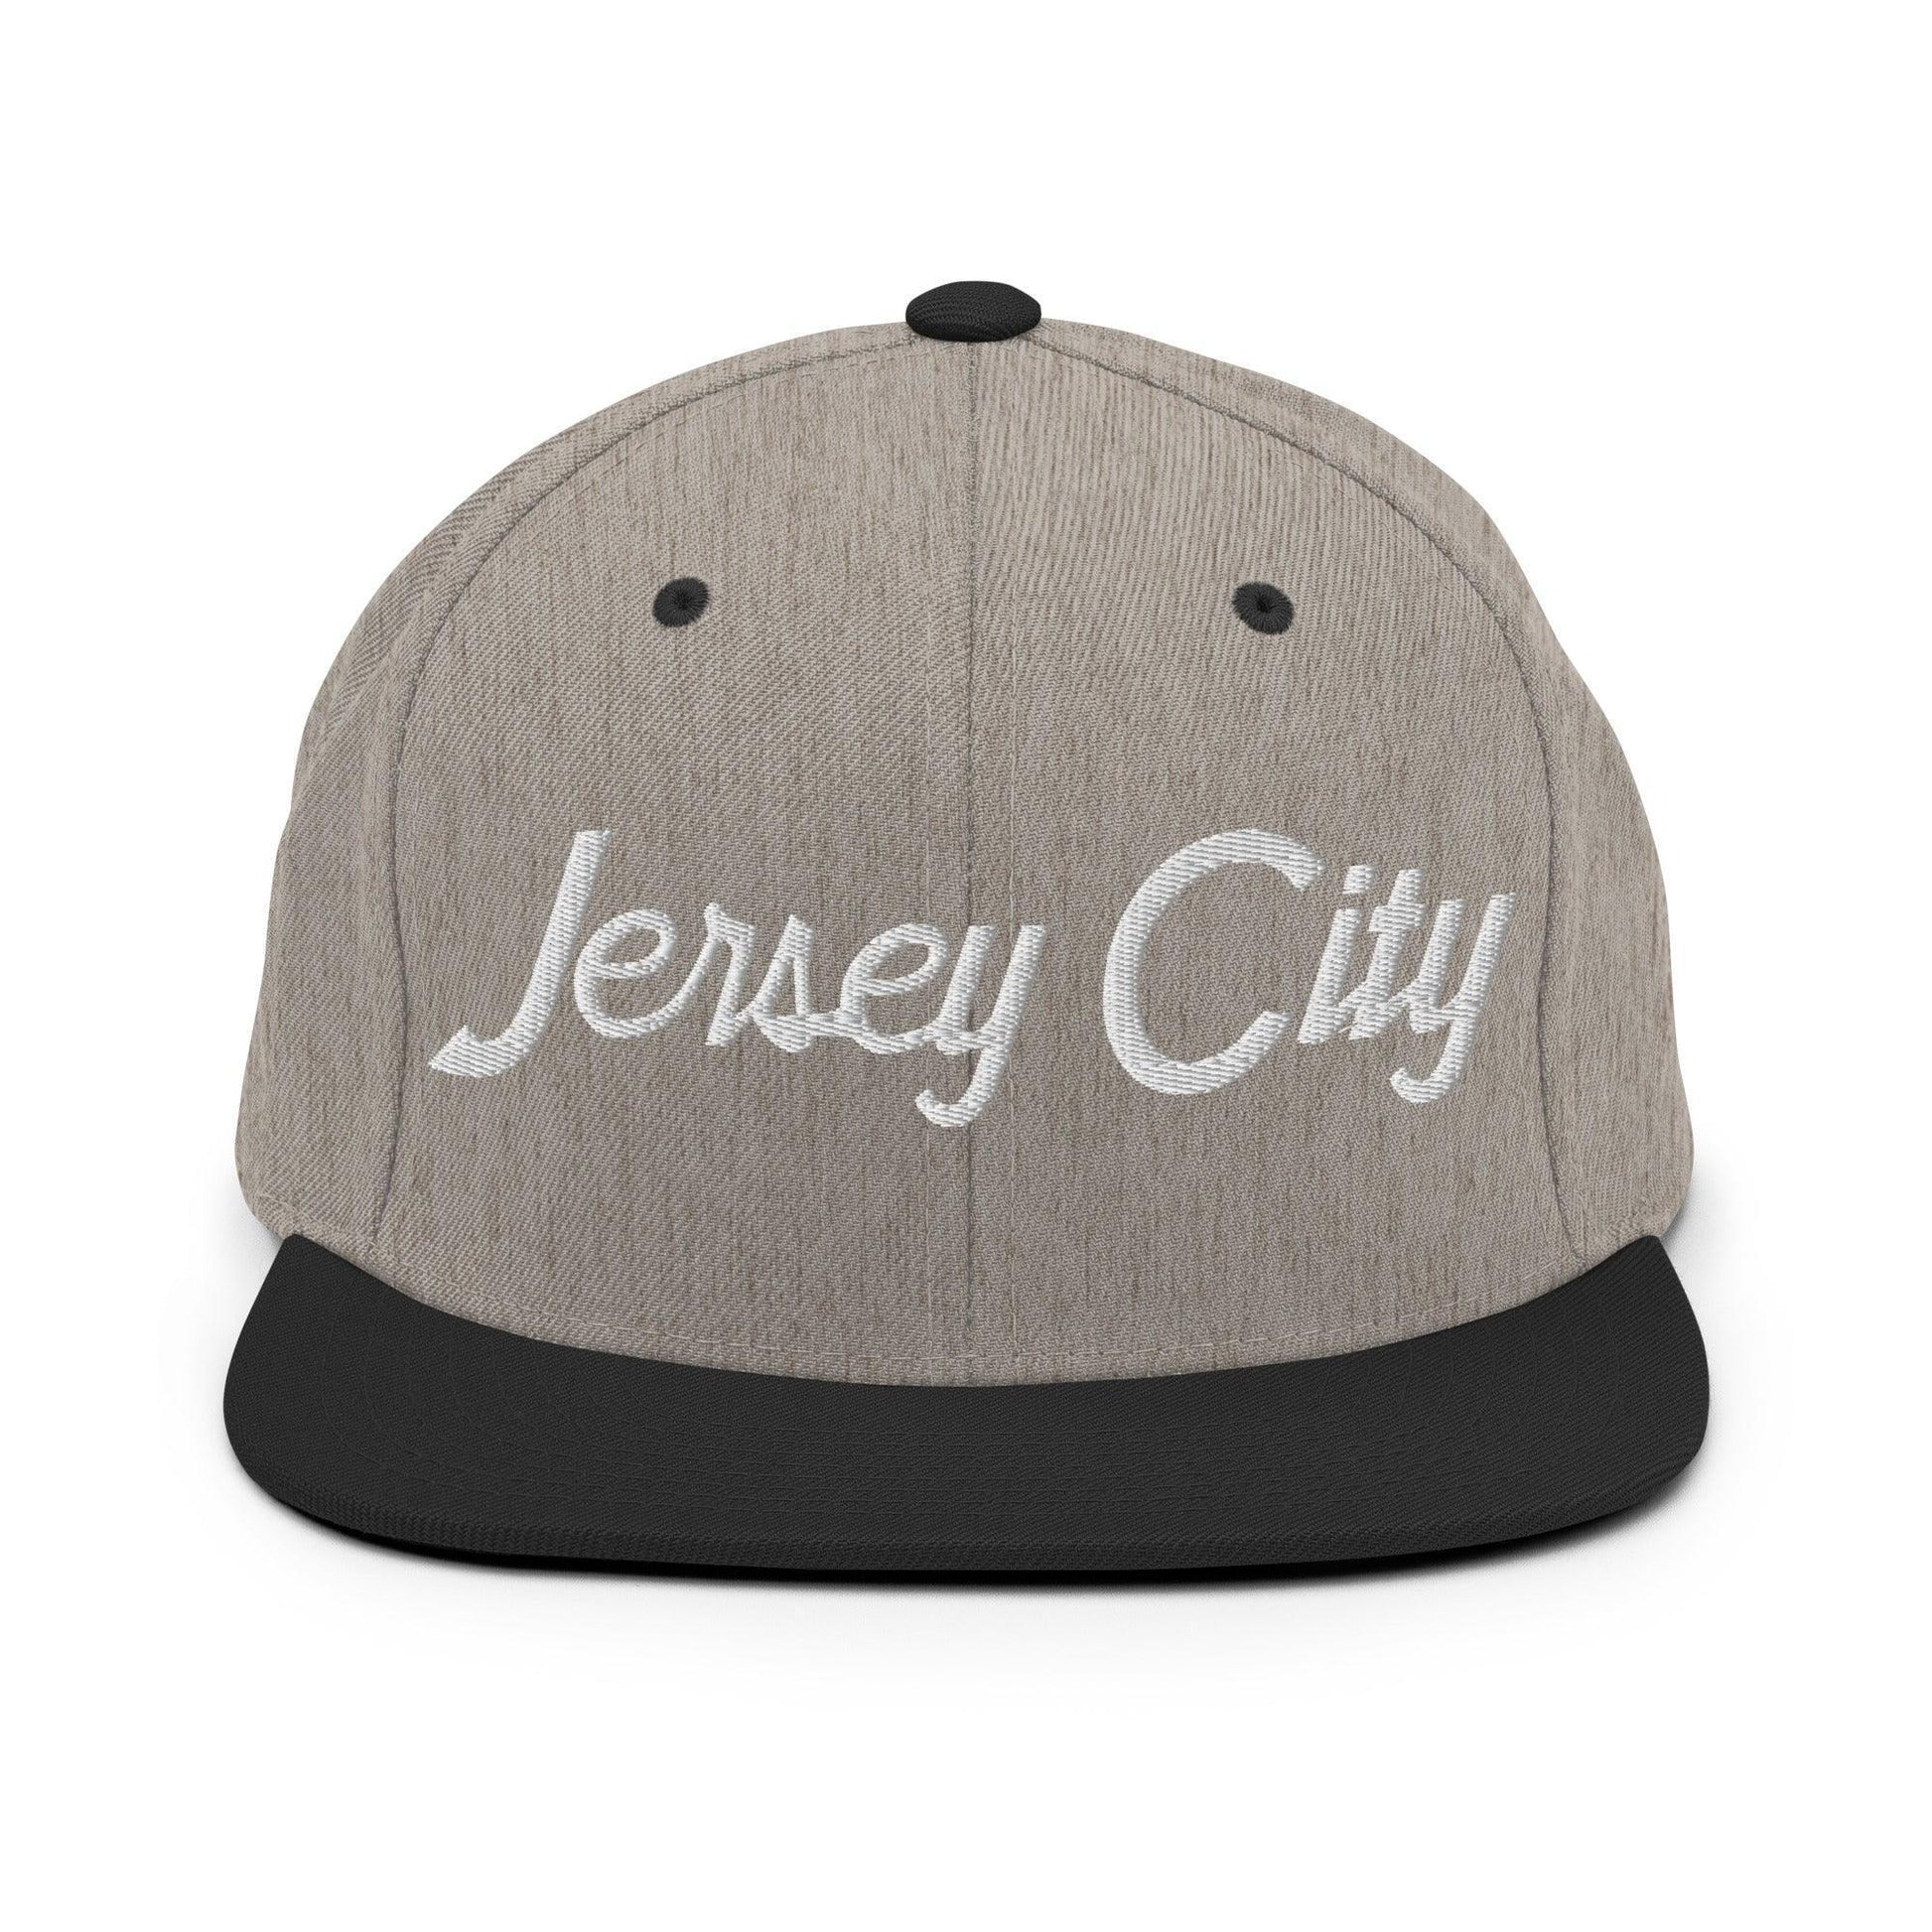 Jersey City Script Snapback Hat Heather/Black